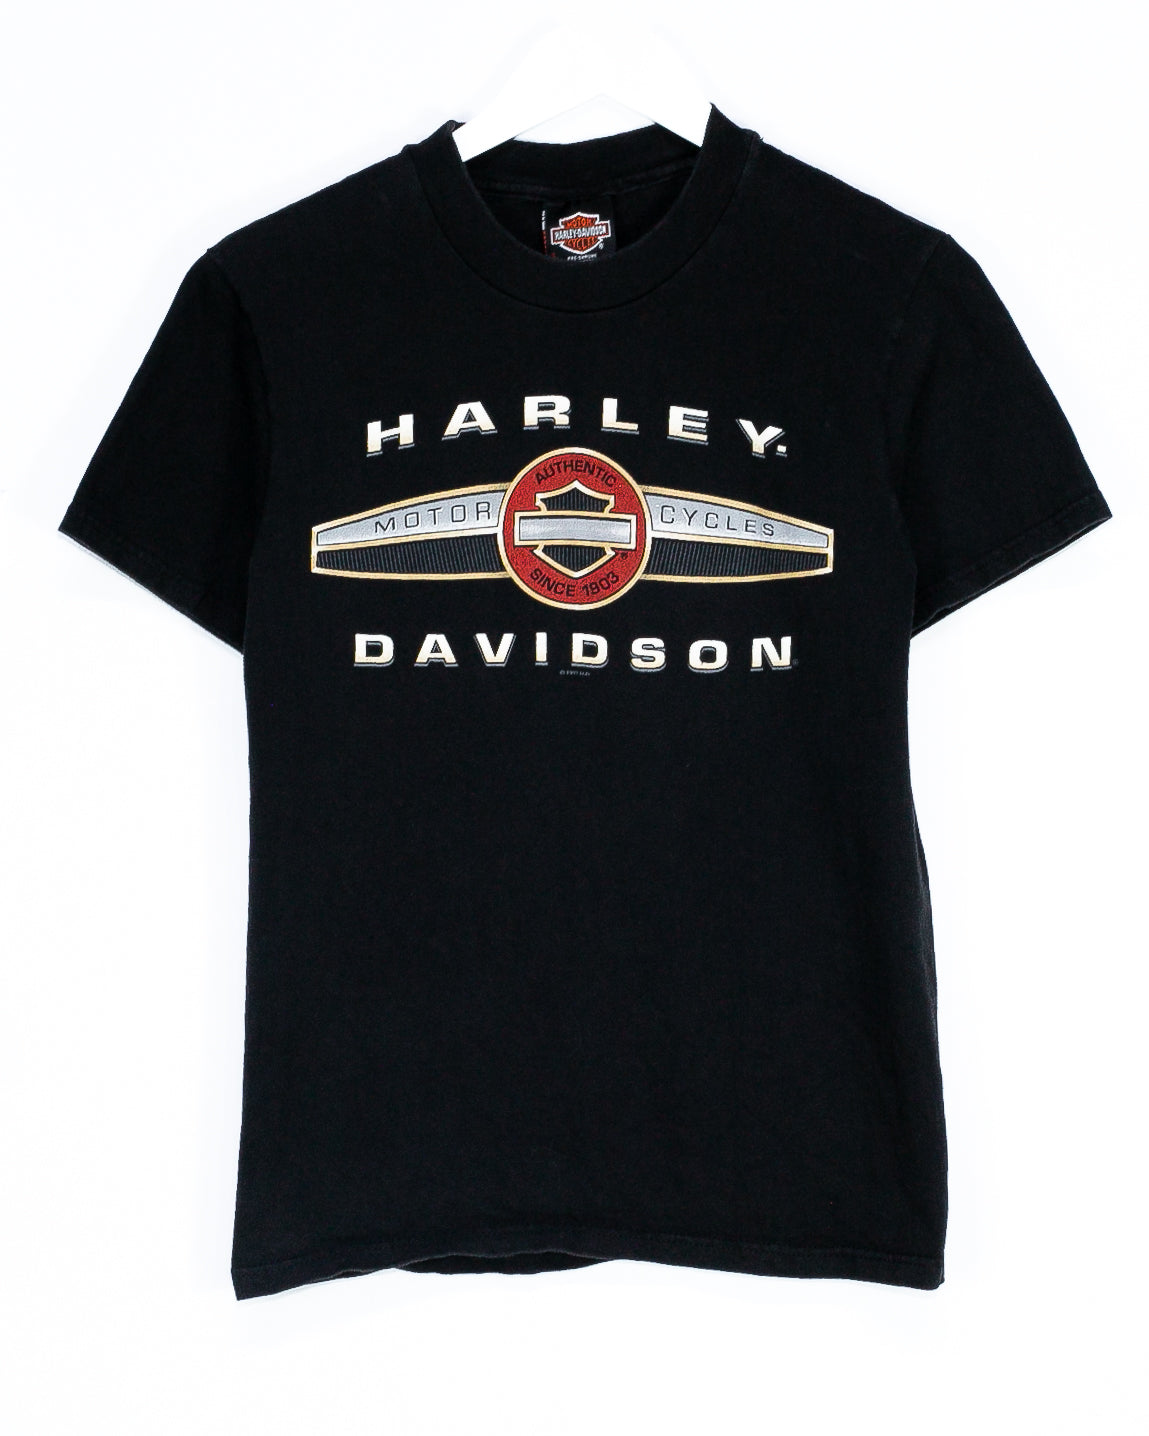 Vintage Harley Davidson 97’ T-shirt (M)